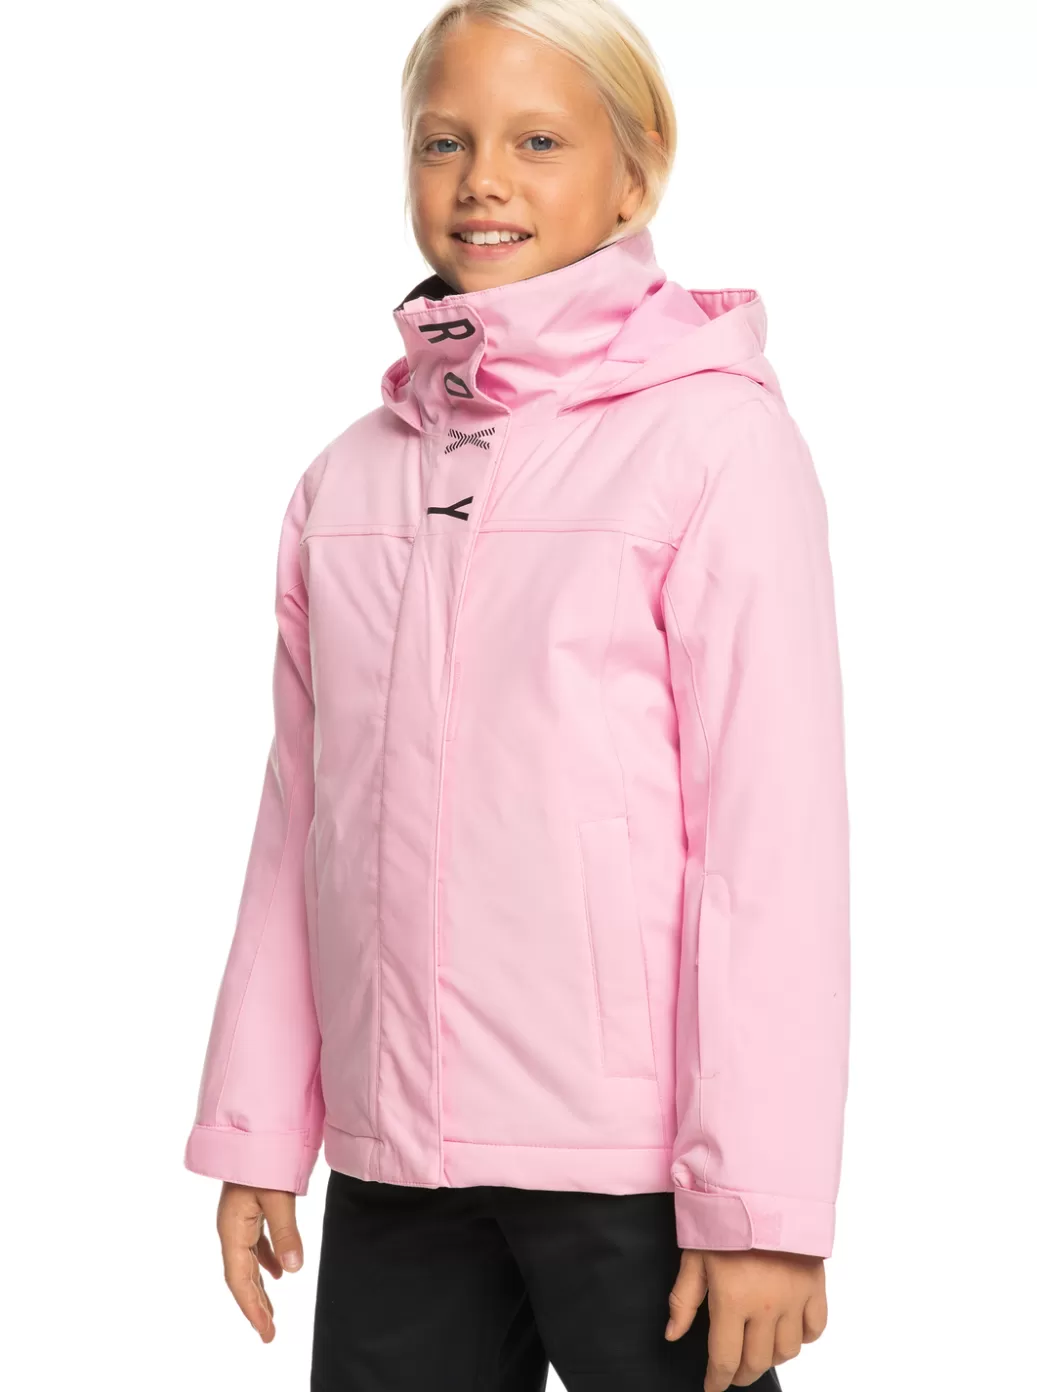 Snow Jackets | Girls Snow | KIDS | WOMEN ROXY Girl's 4-16 Galaxy Technical Snow Jacket Pink Frosting